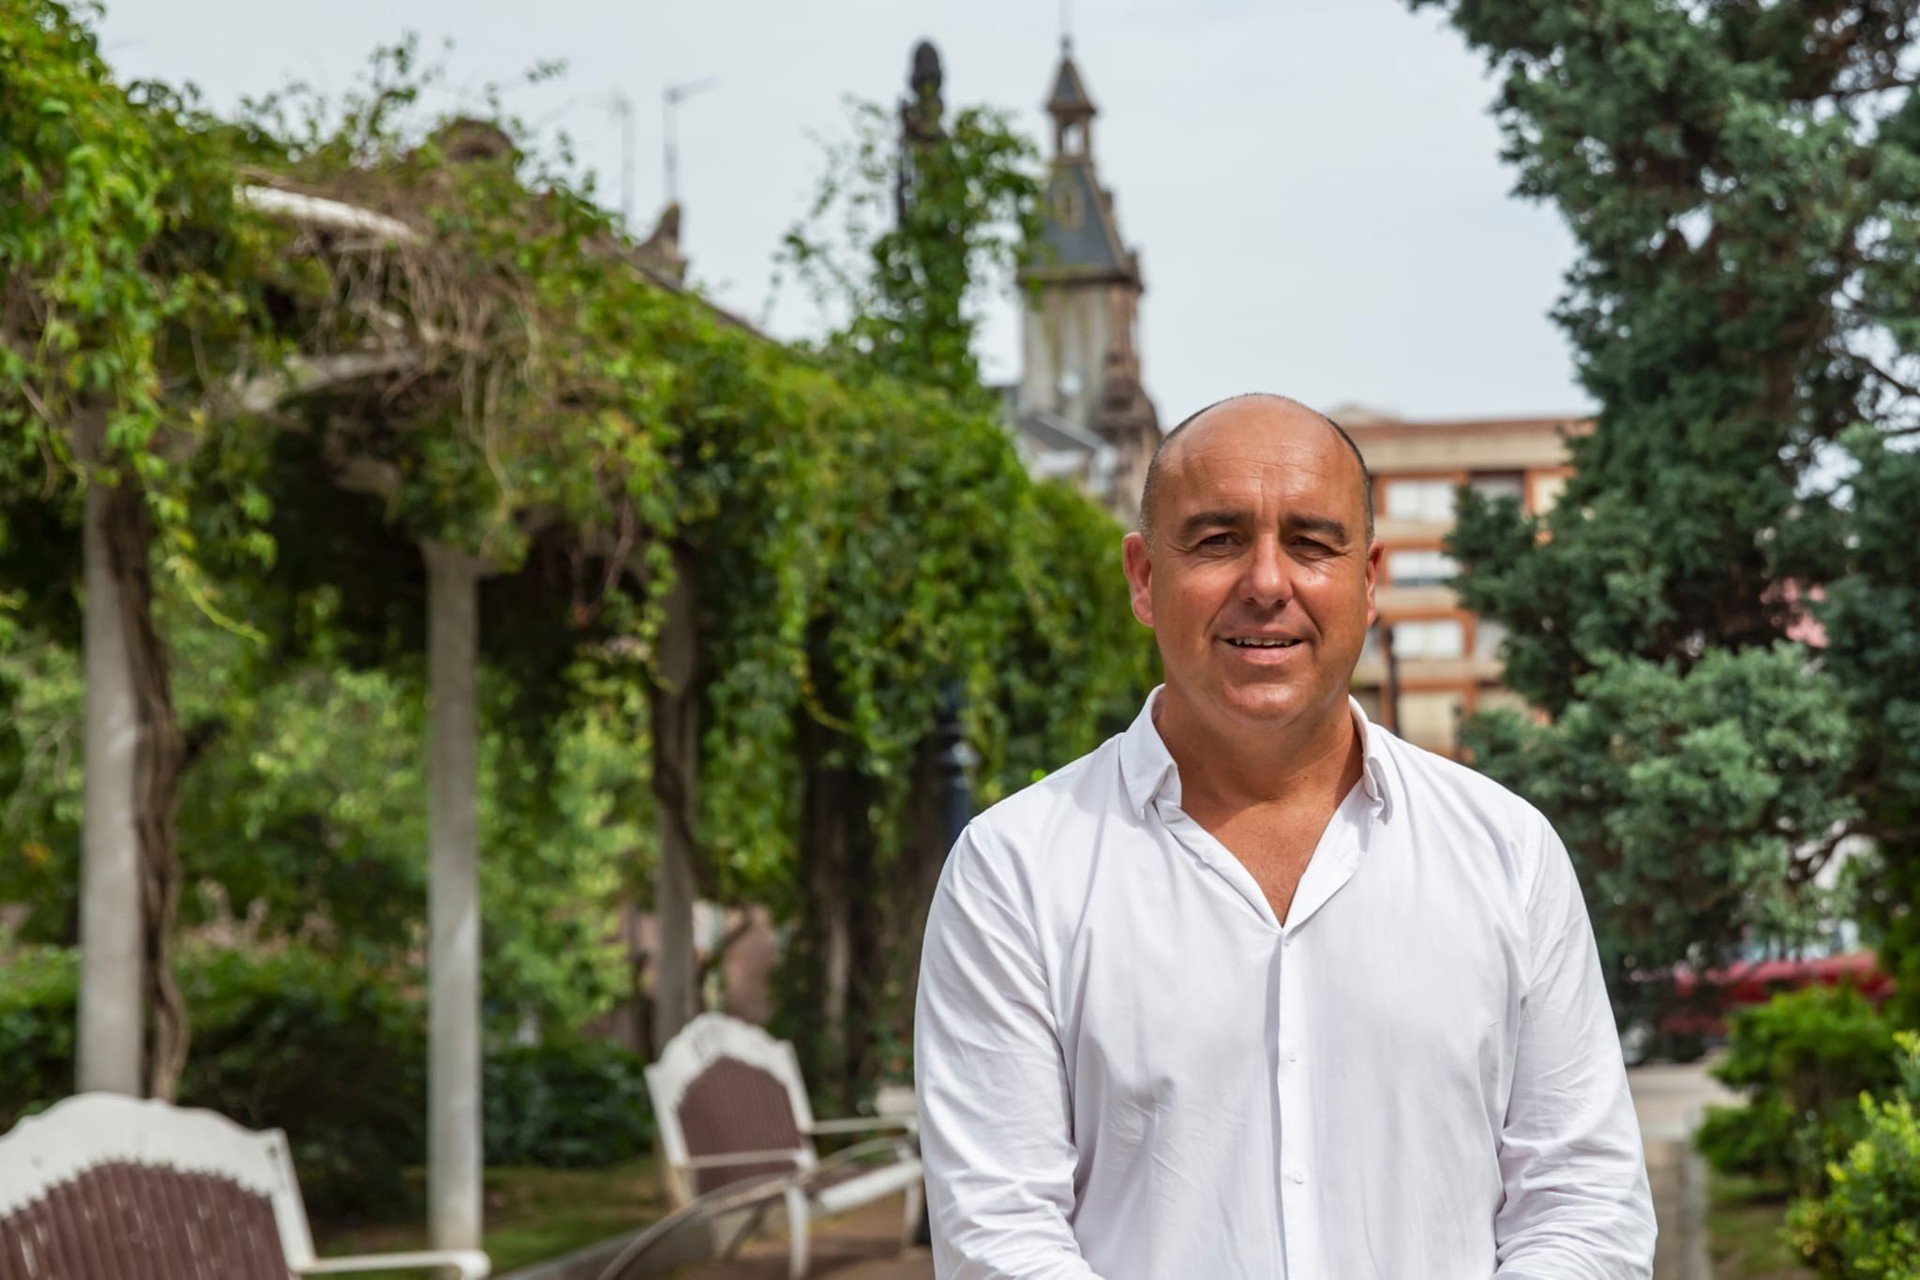 Cs Torrelavega proposes to create a “pet-friendly” space in a garden …